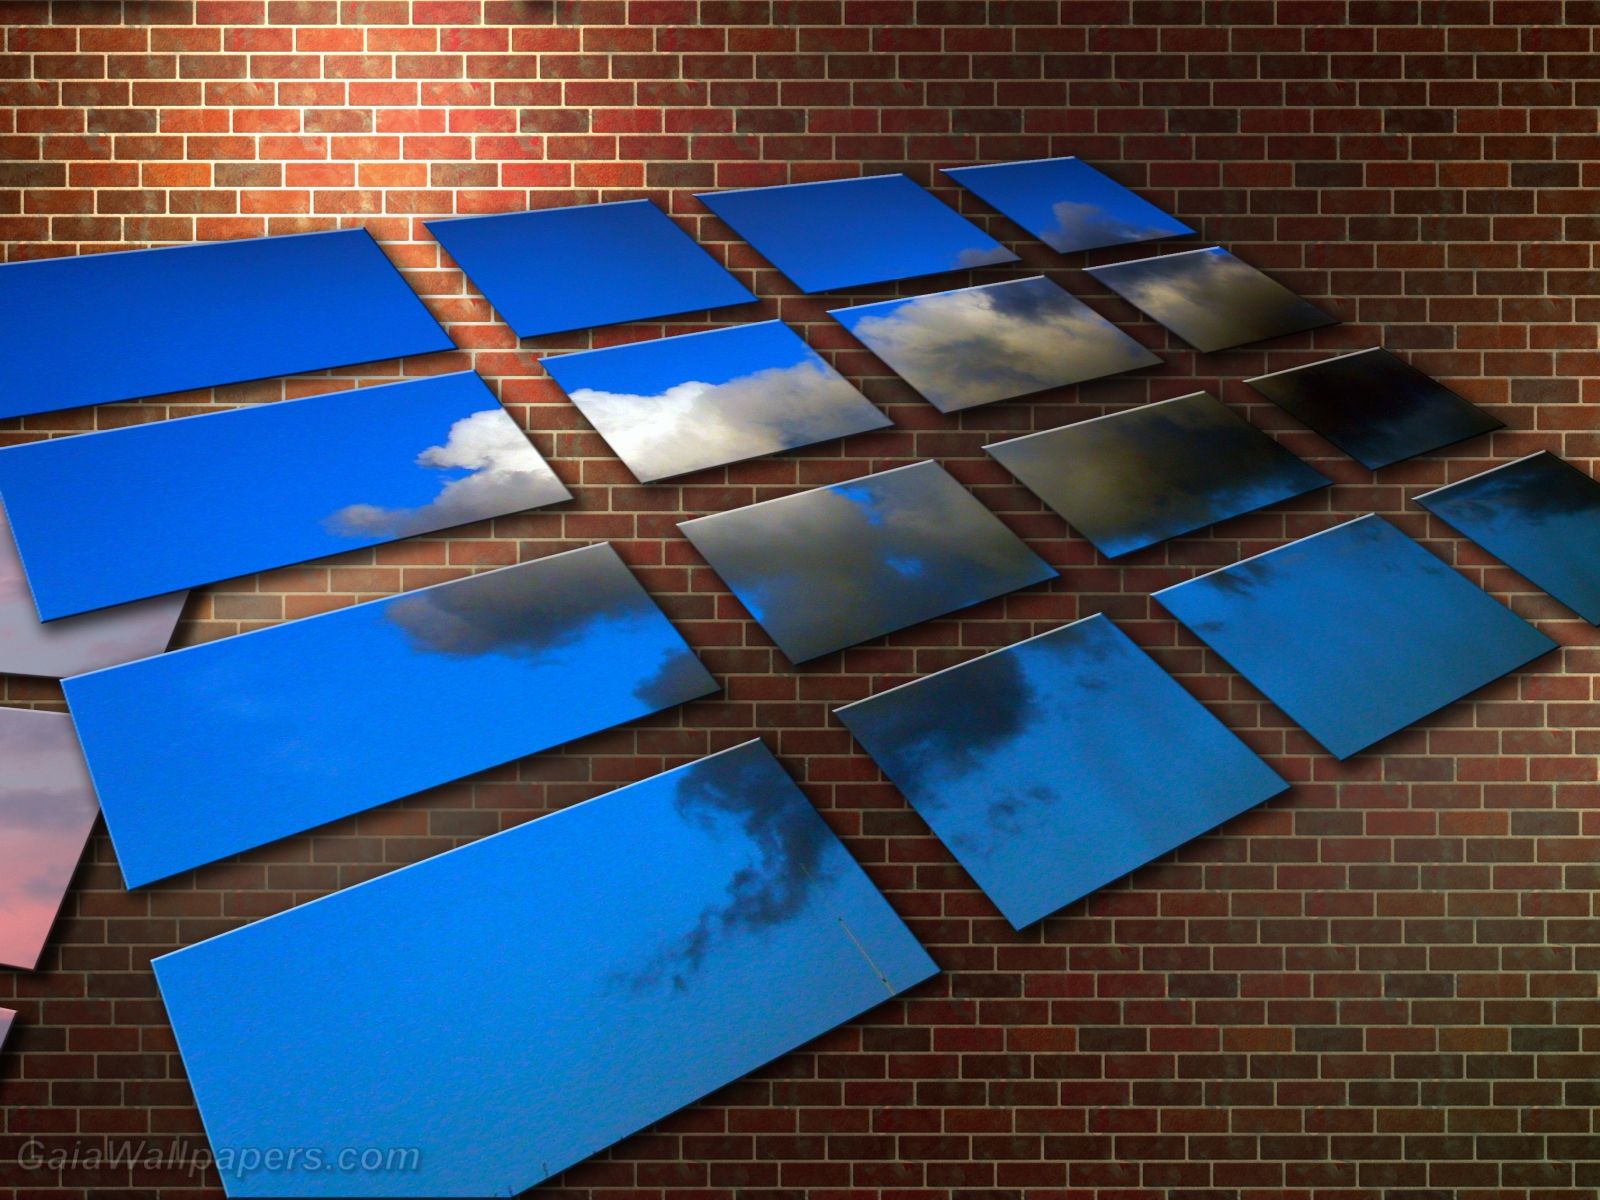 Ciels virtuels sur un mur de briques - Fonds d'écran gratuits